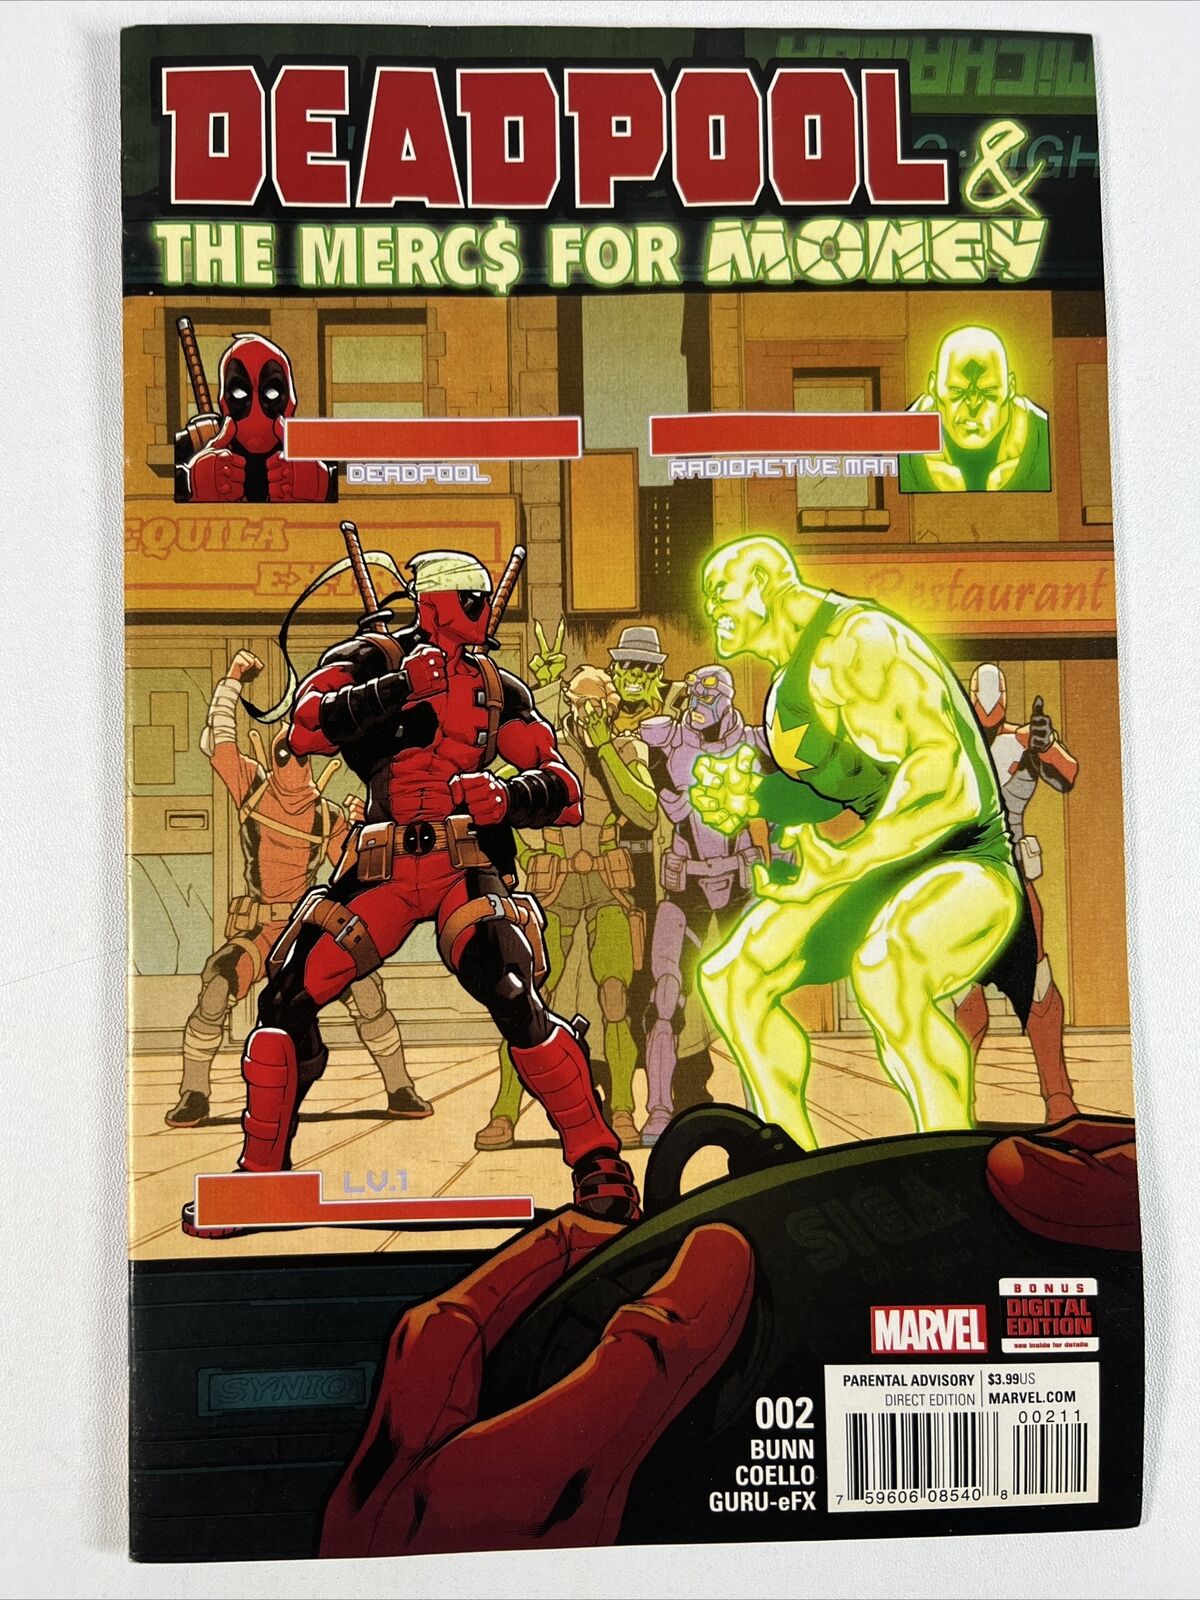 Deadpool & the Merc$ for Money #2 (2016) Marvel Comics